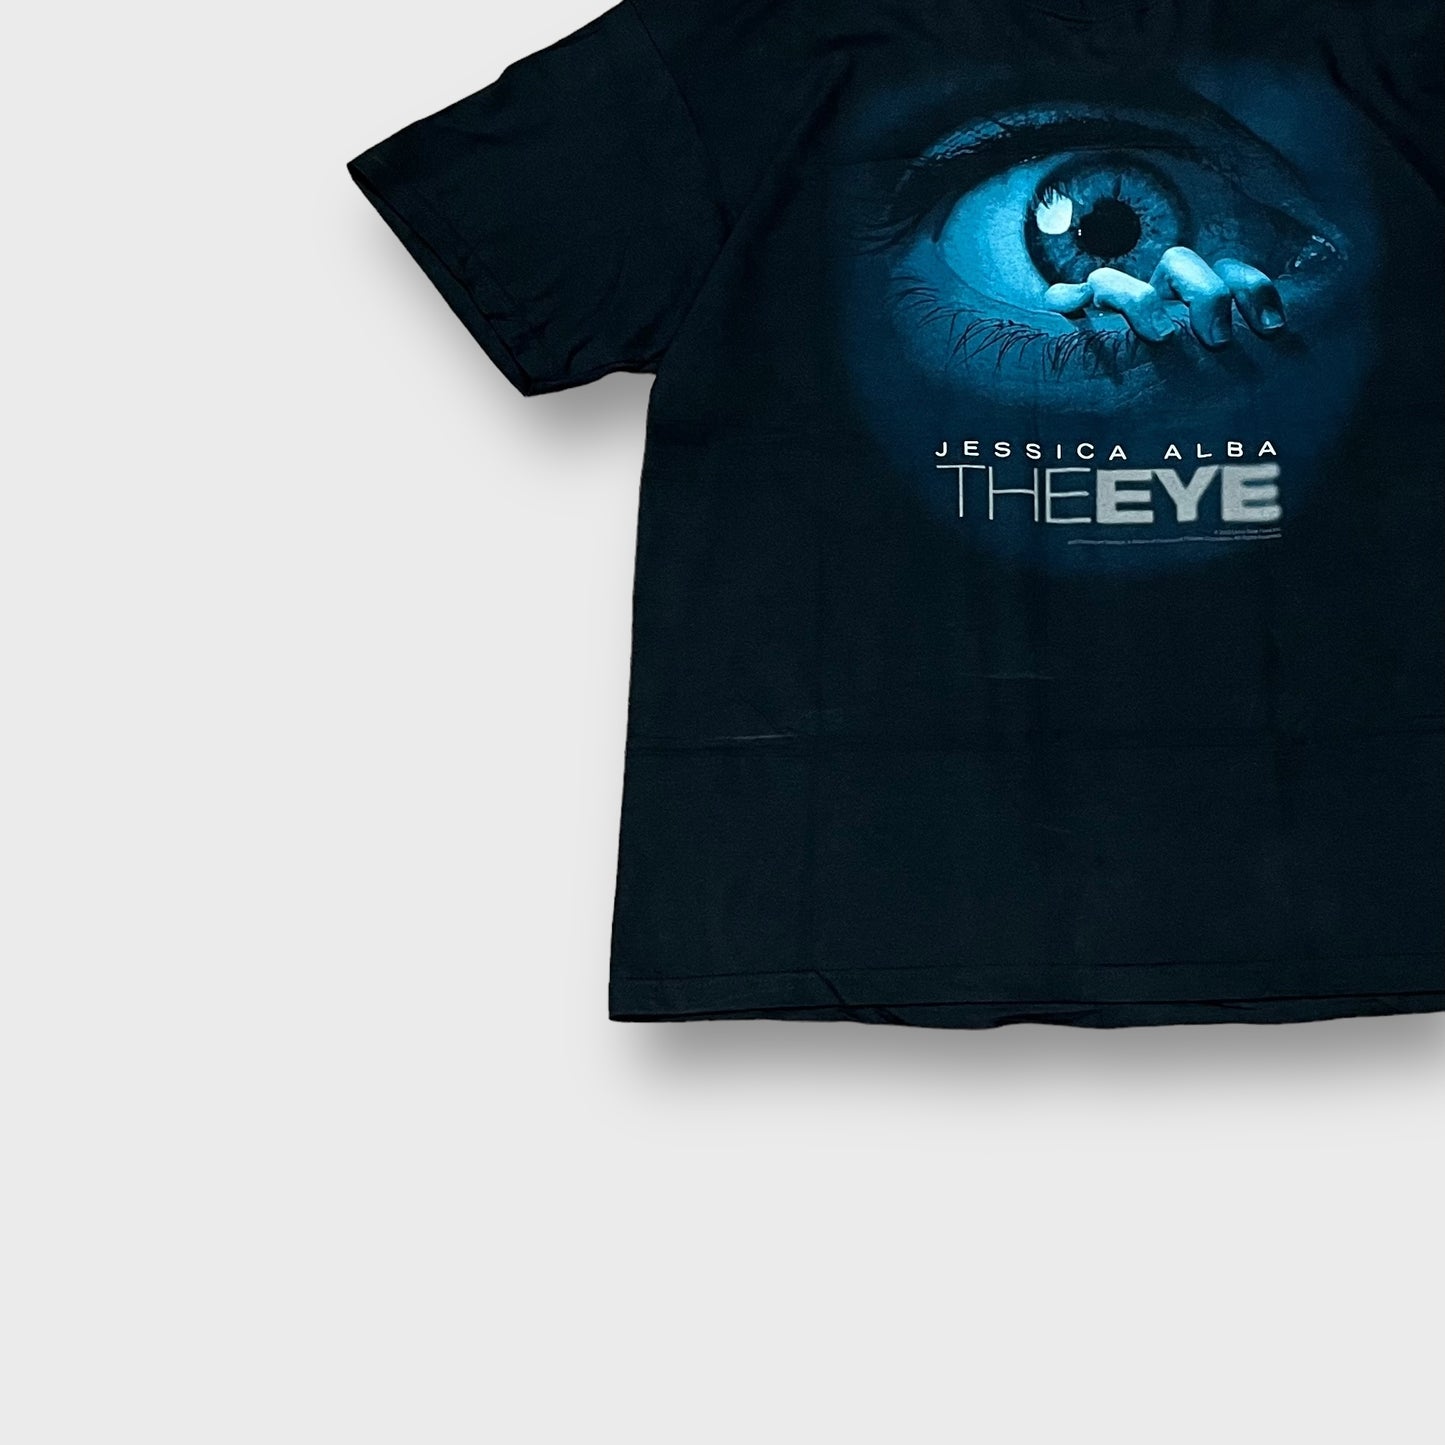 2008 “THE EYE” movie t-shirt